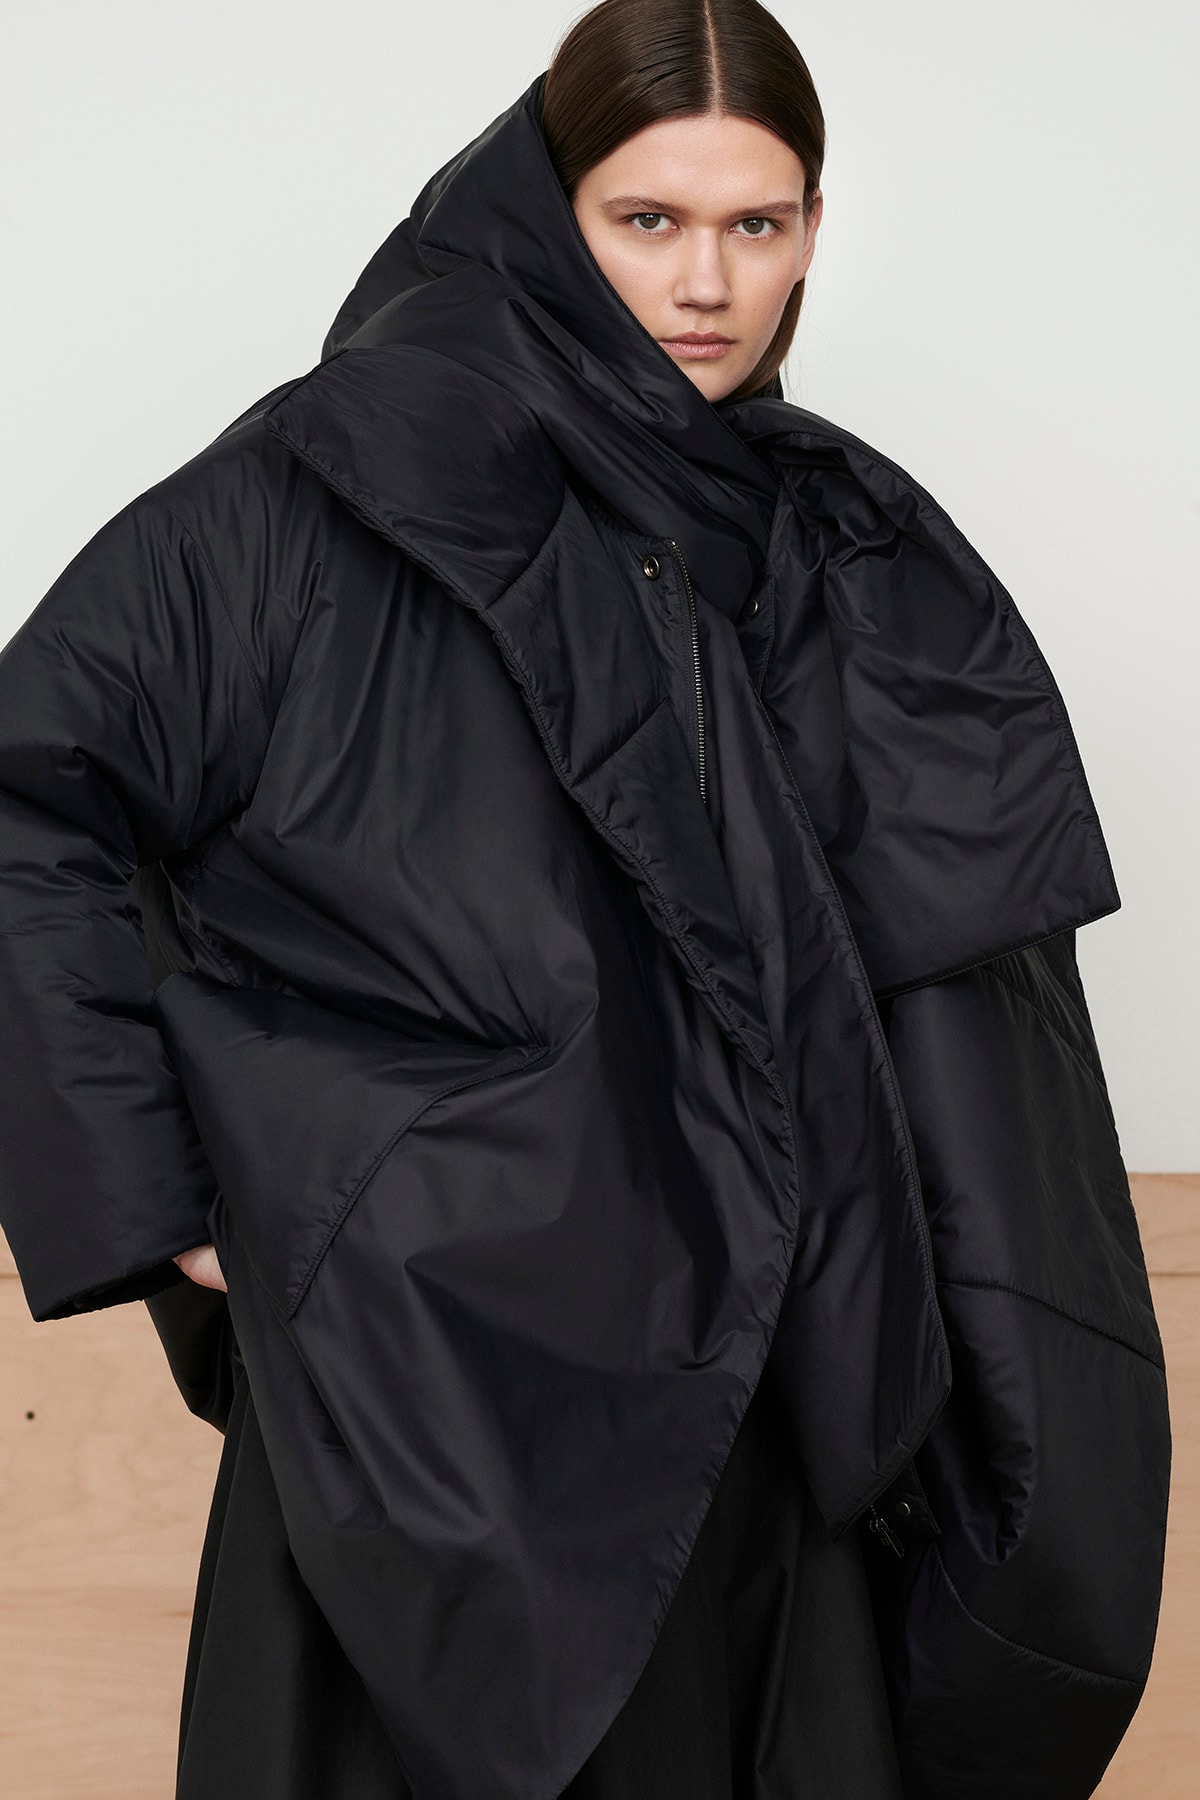 Eileen Fisher x Nordstrom Olivia Kim Sustainable Collection Nylon Coat Black